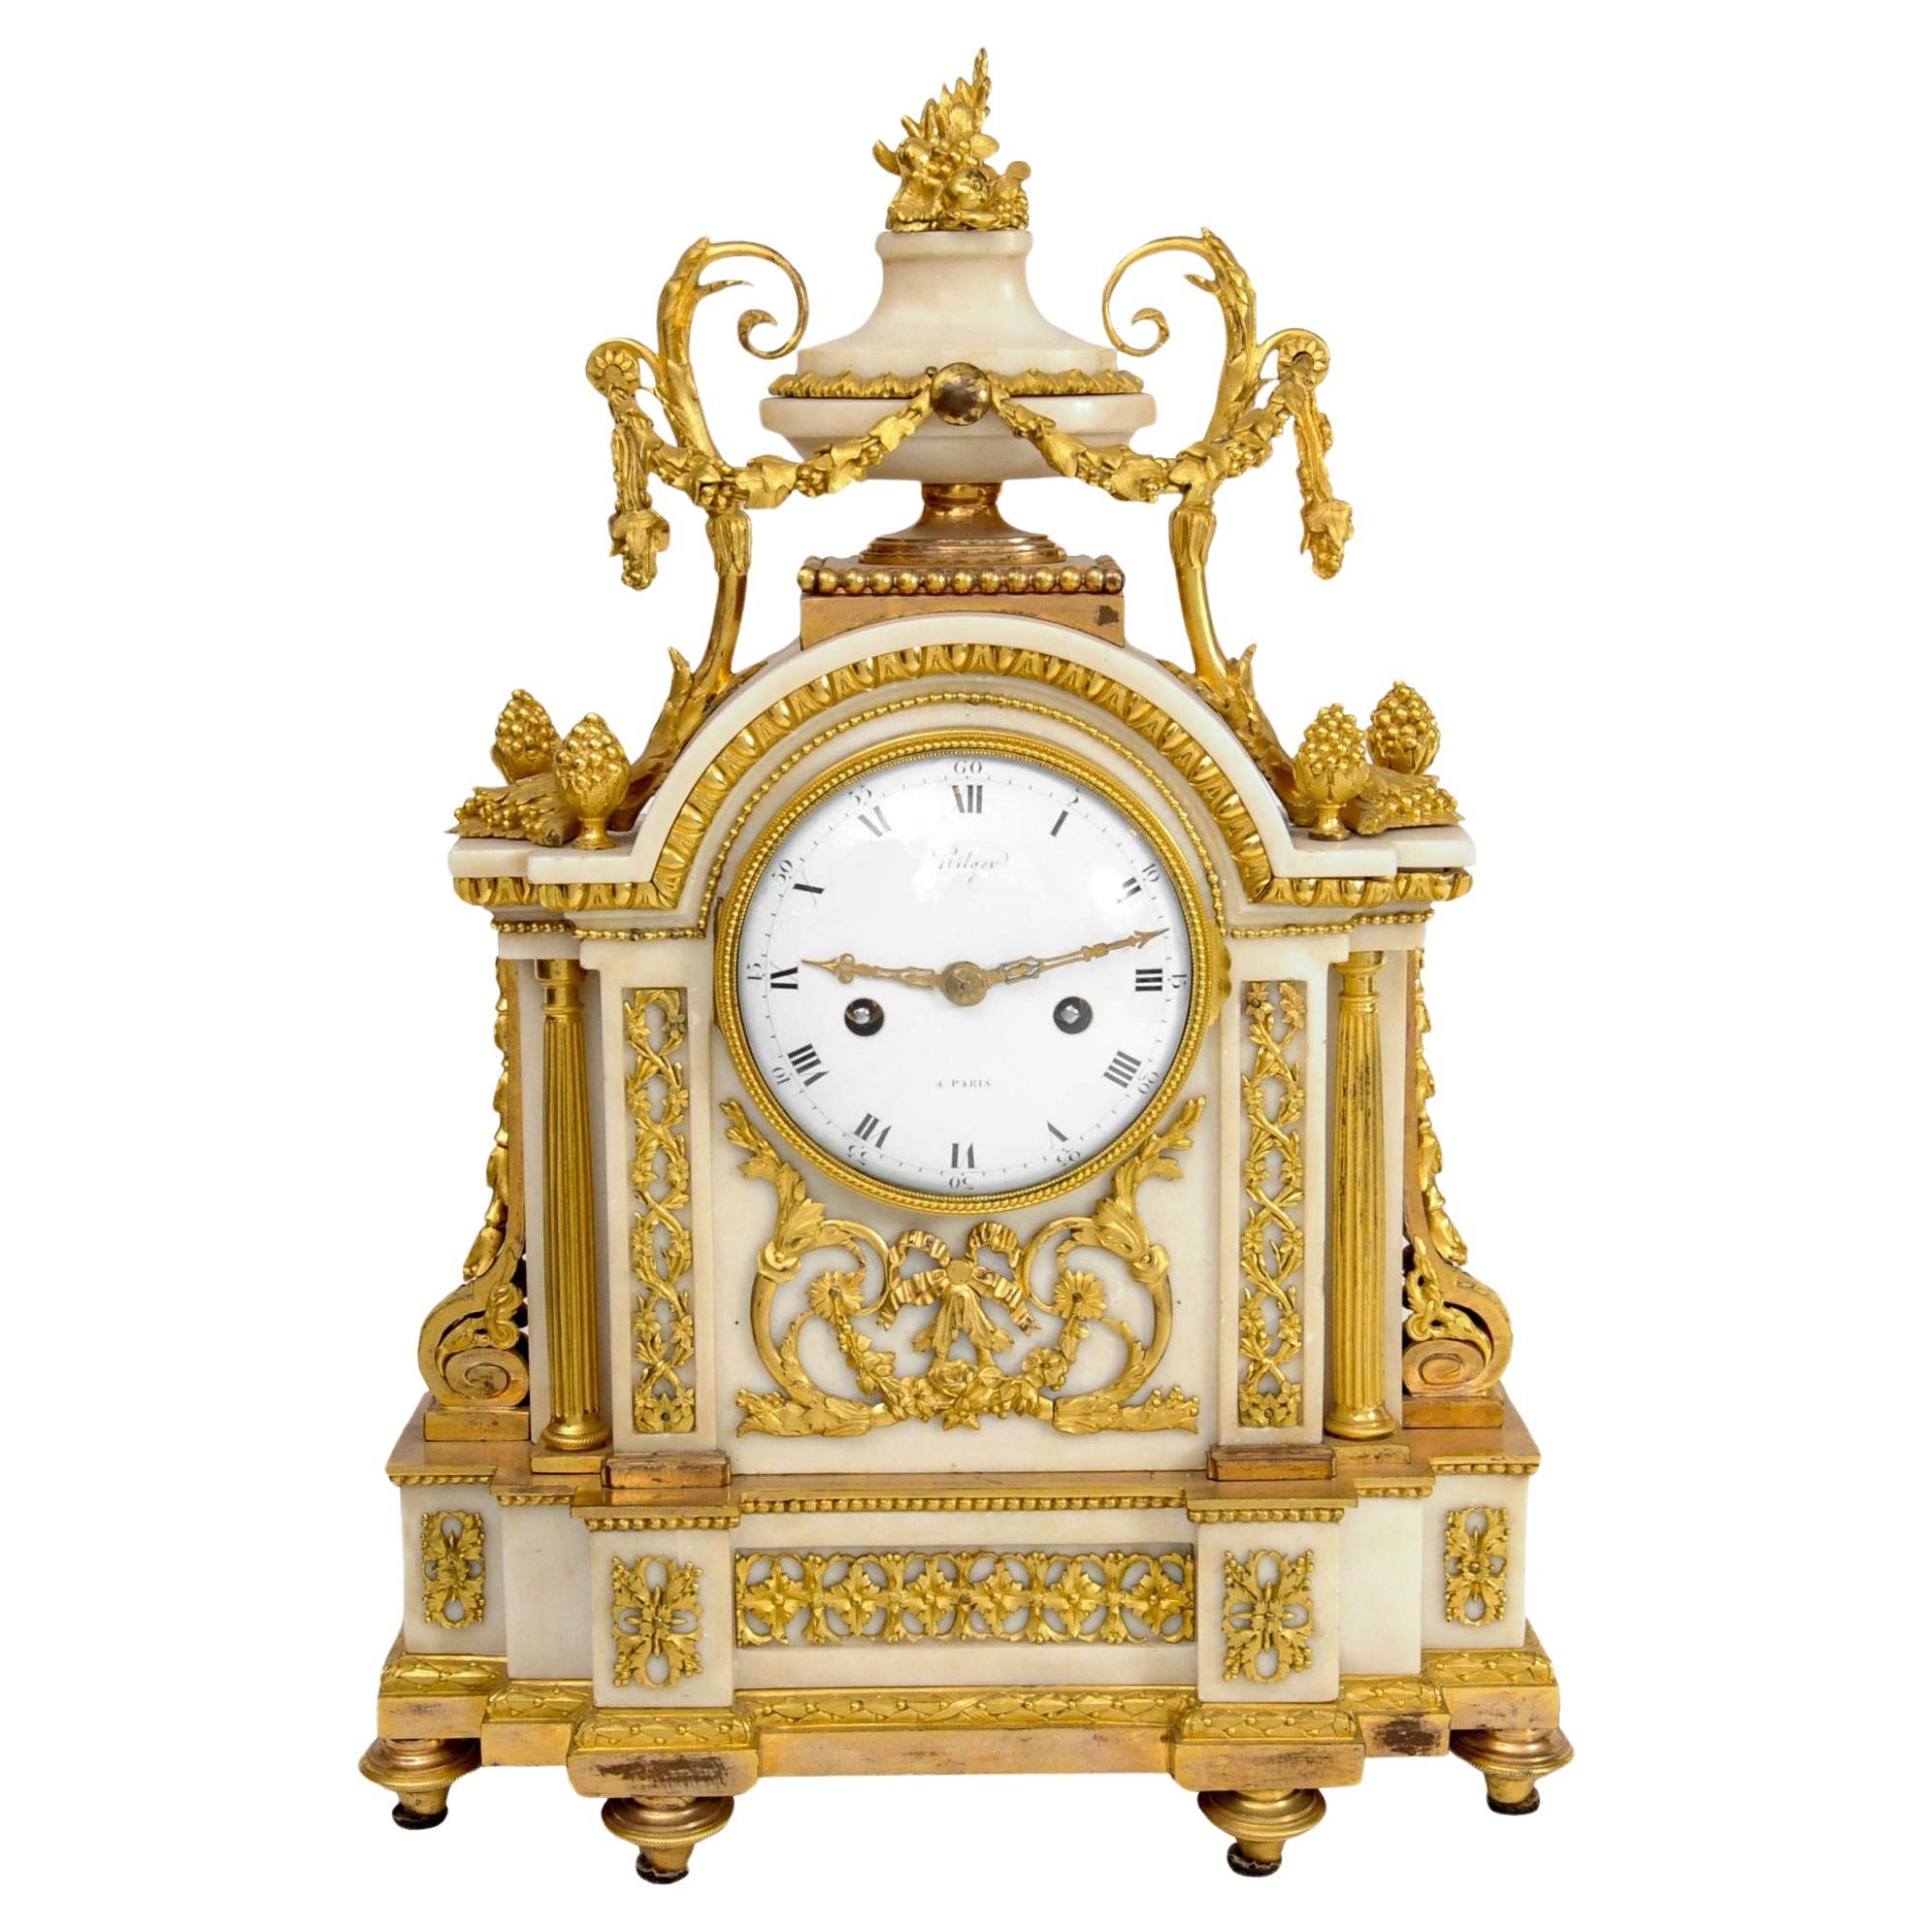 French Louis XVI mantel clock by Hilger